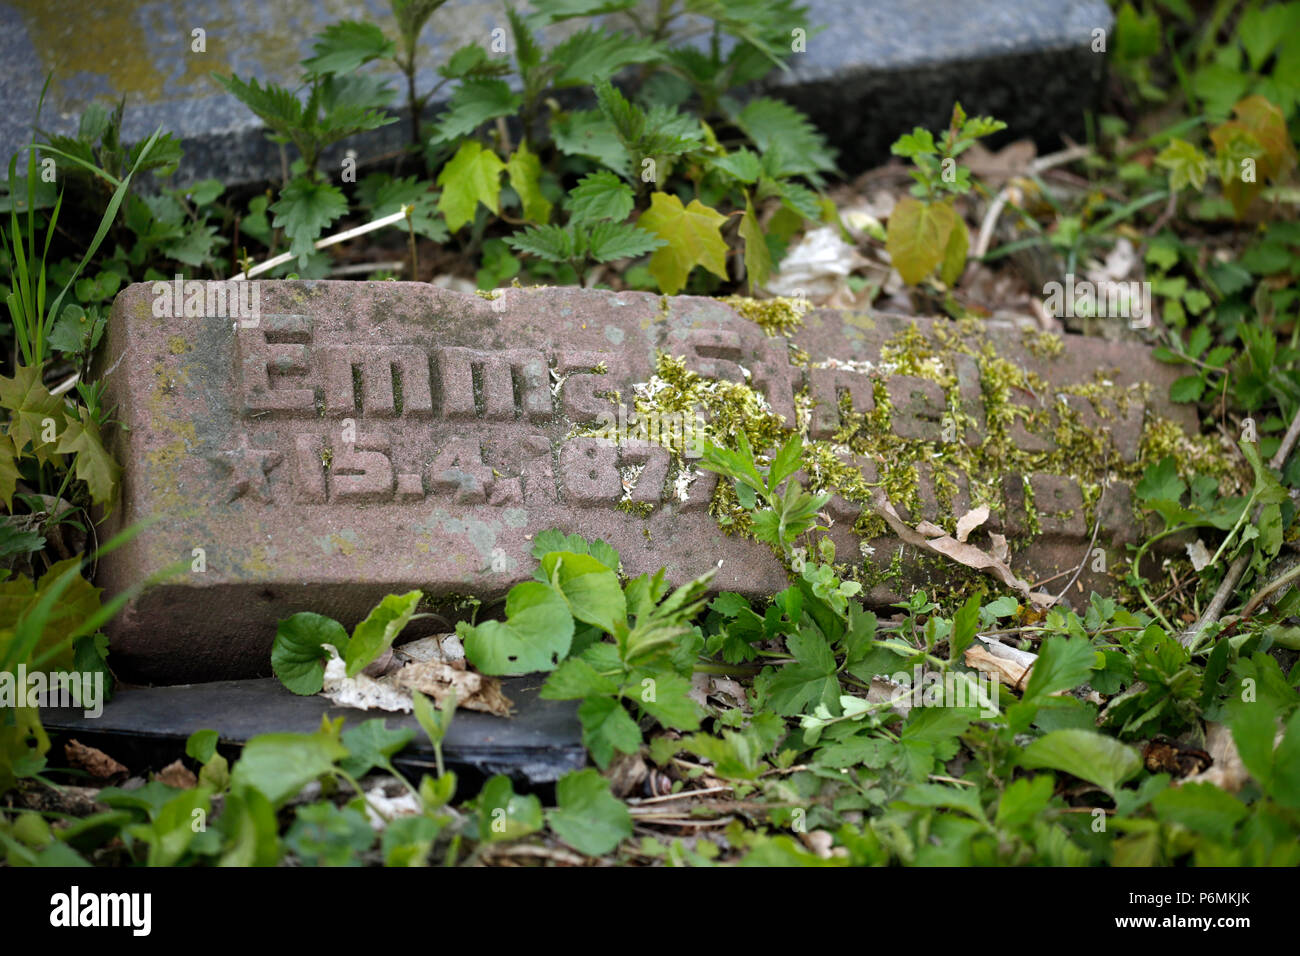 Berlin, Allemagne - tombstone envahi Banque D'Images